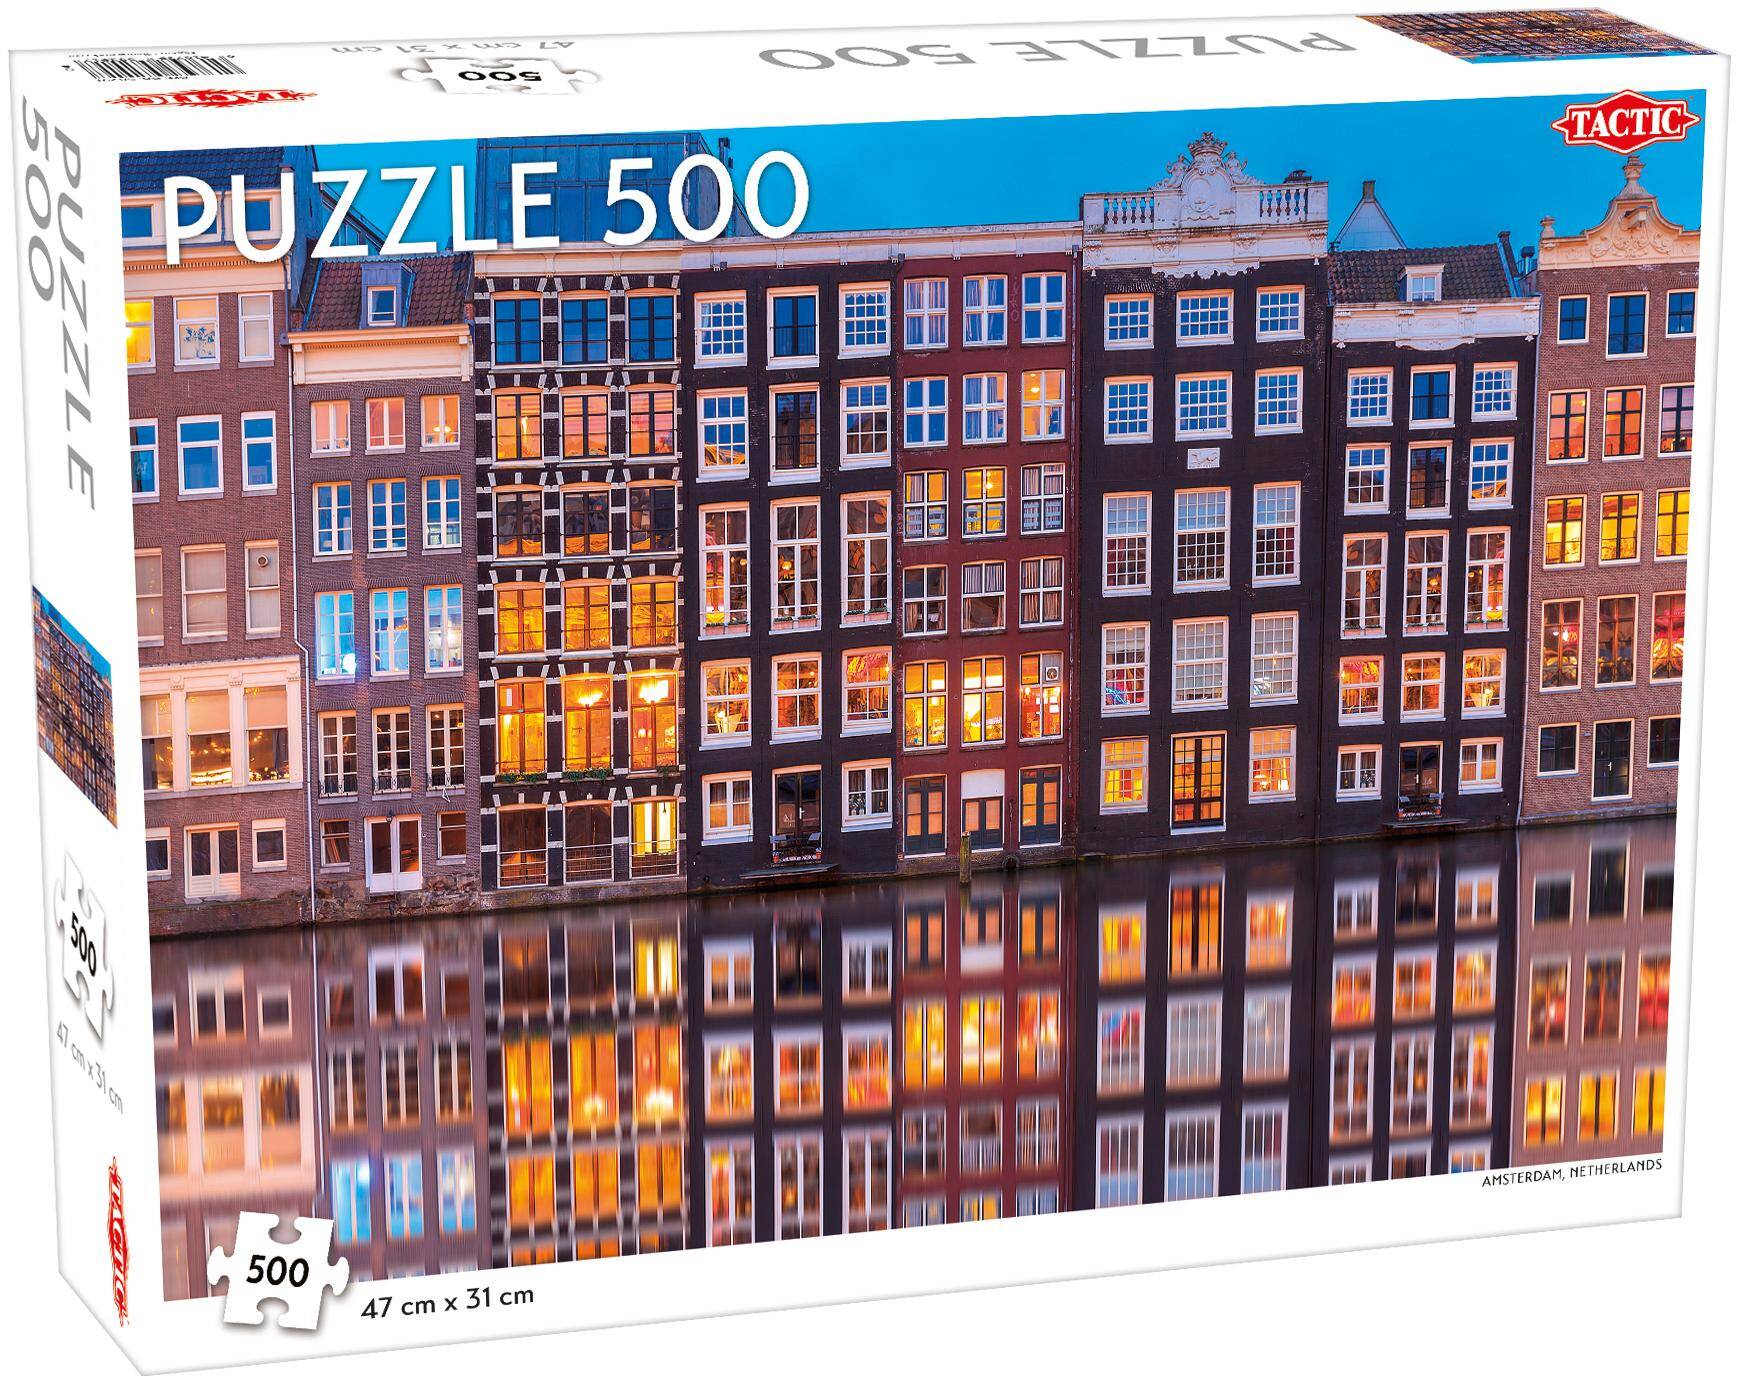 Puzzle 500 Around the World Amsterdam Herlands